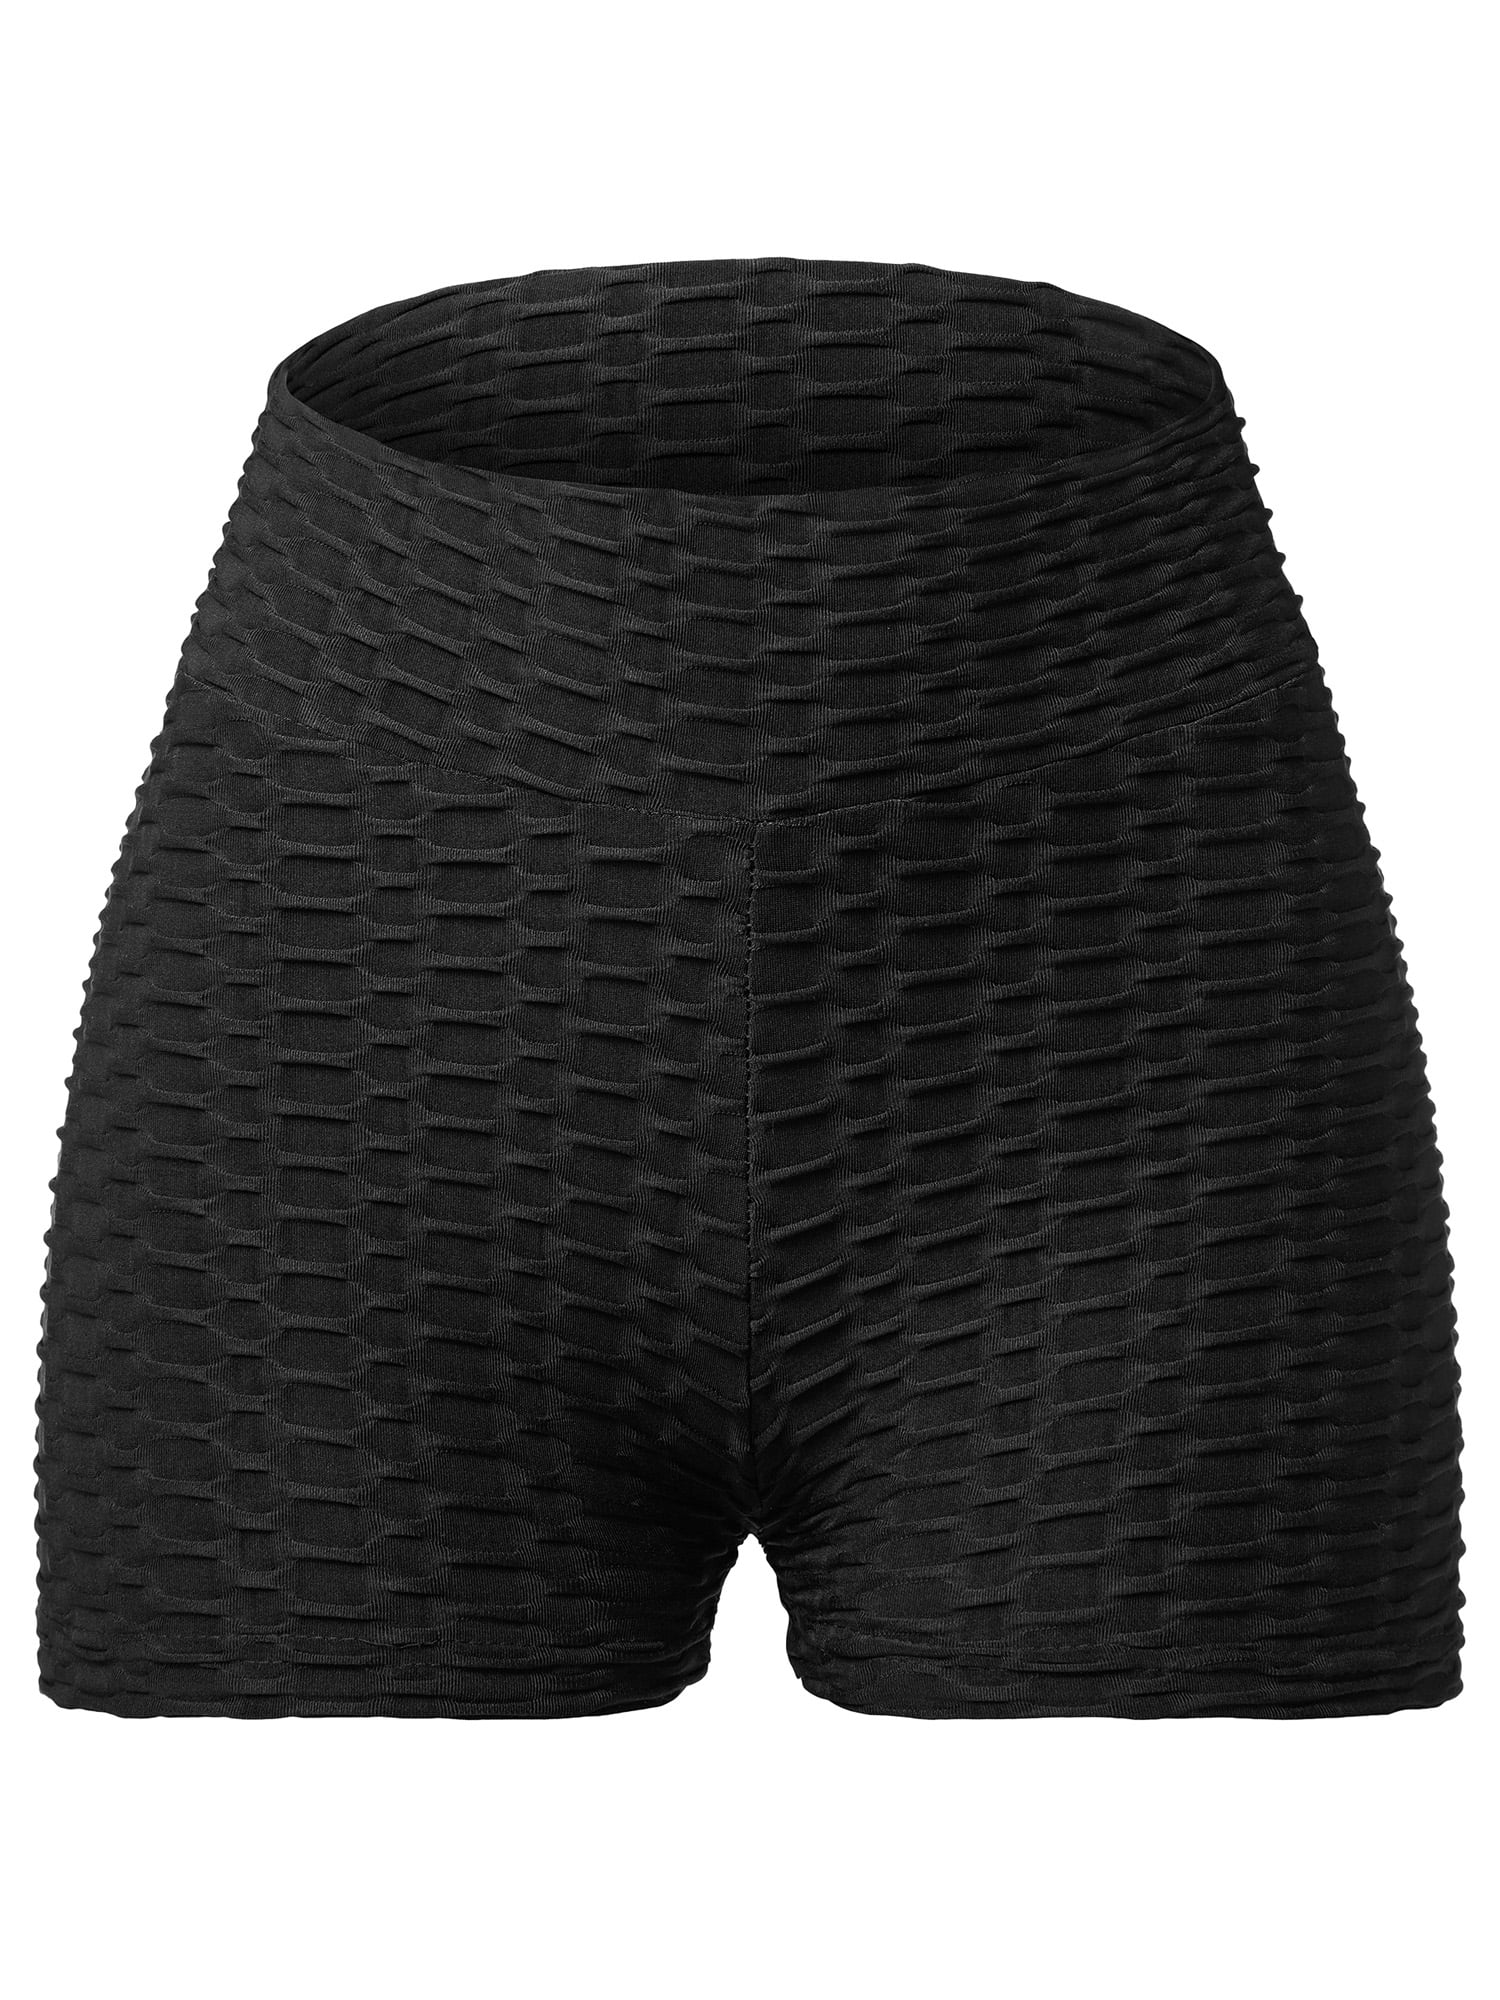 ODODOS DUAL POCKET High Waist Workout Shorts,Tummy Control, Black, Size M D  £12.31 - PicClick UK